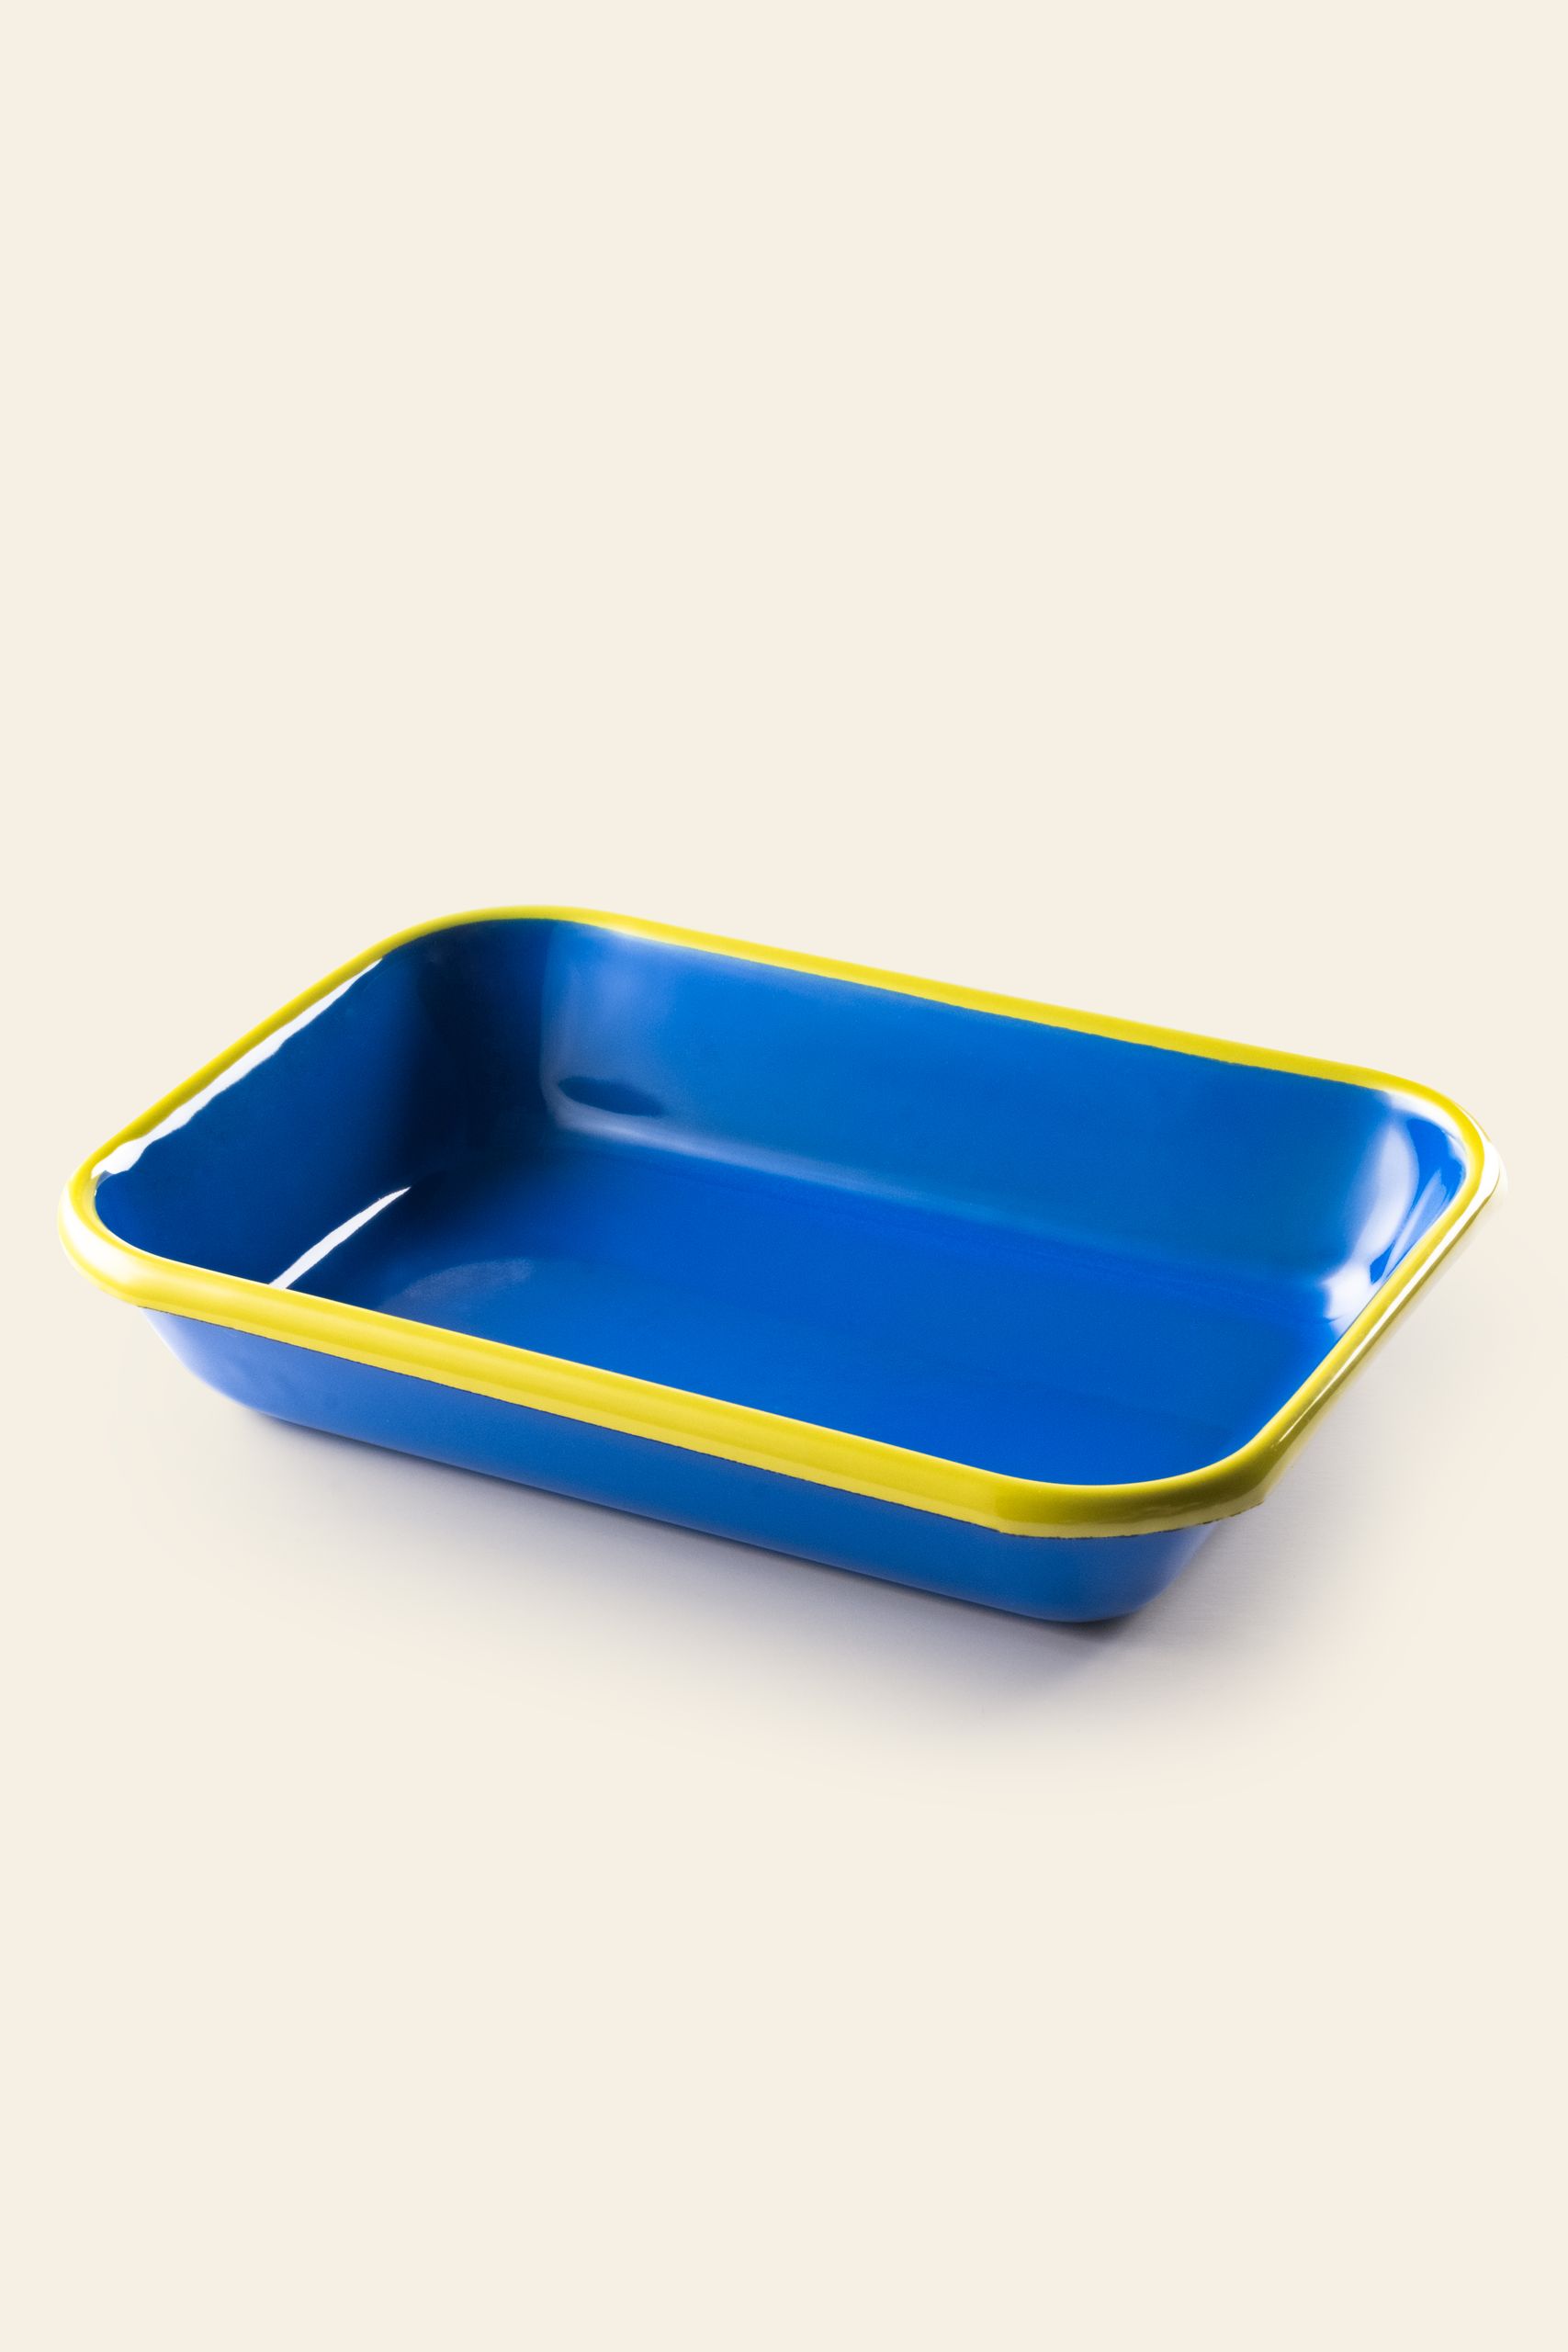 Bornn Enamelware Colorama Baking Dish Medium Electric Blue With Chartreuse Rim 2